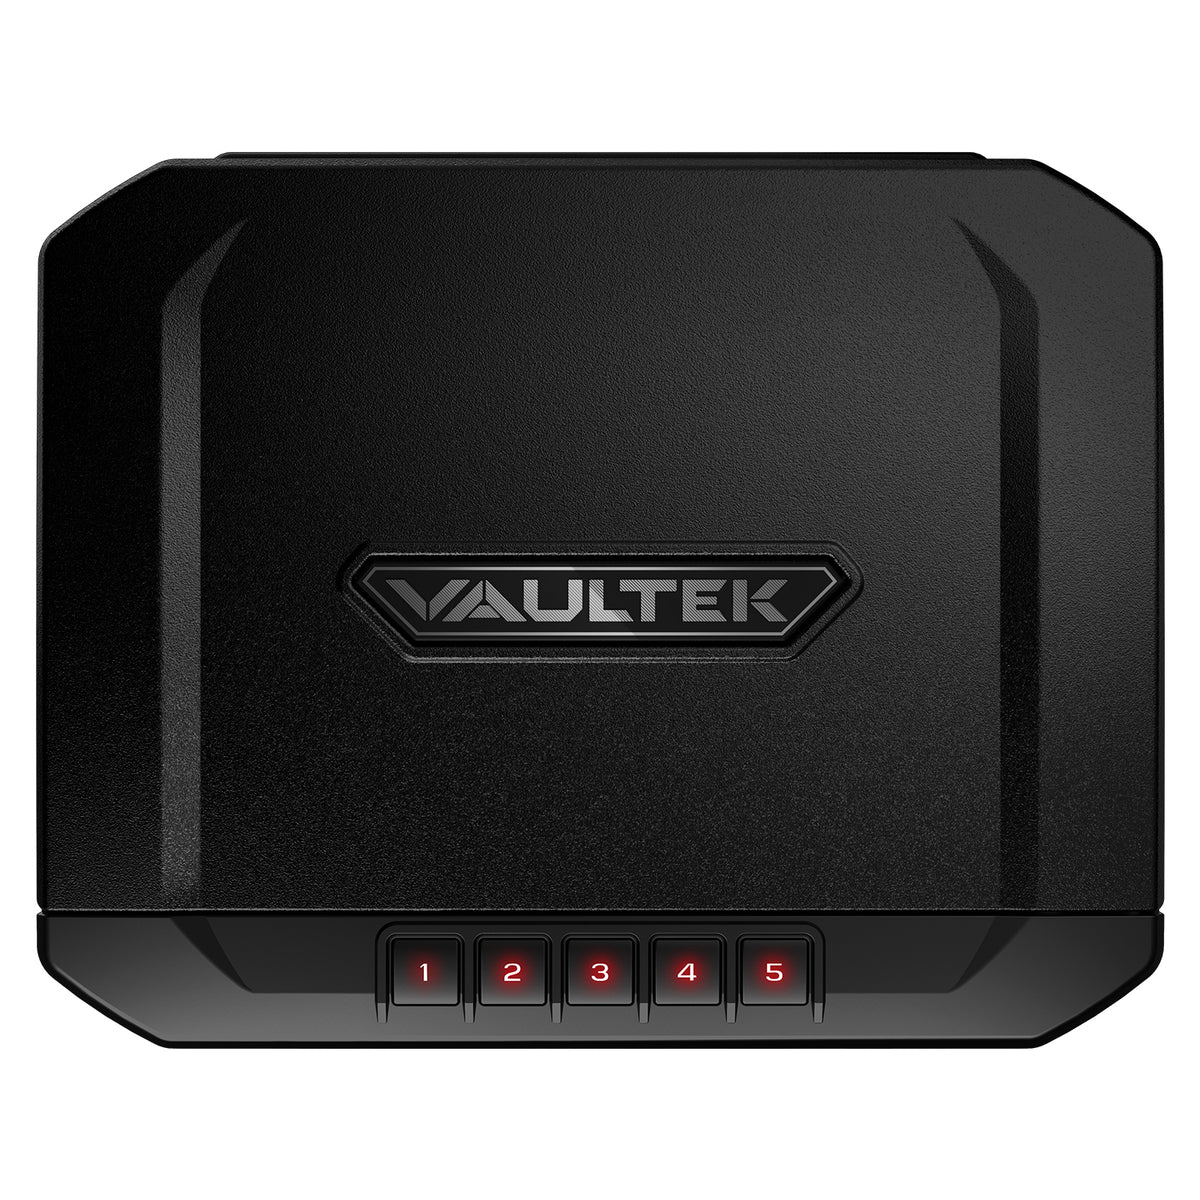 Vaultek - VE10 Sub-Compact Rugged Safe